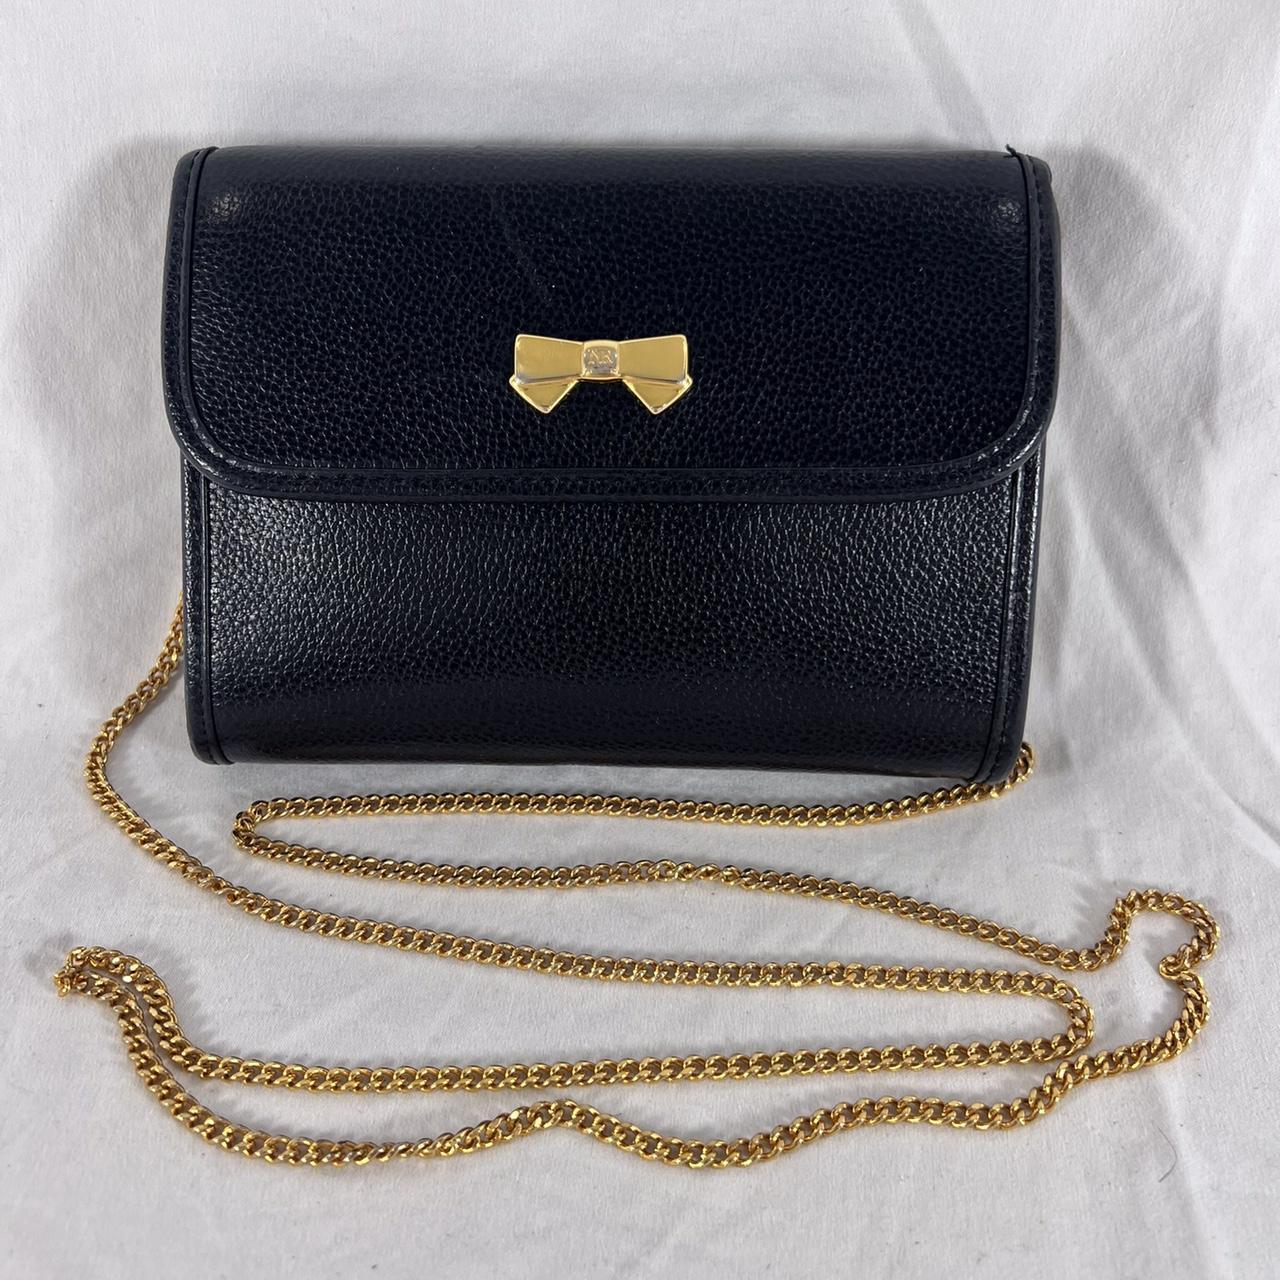 Nina Ricci Women's Black and Gold Bag